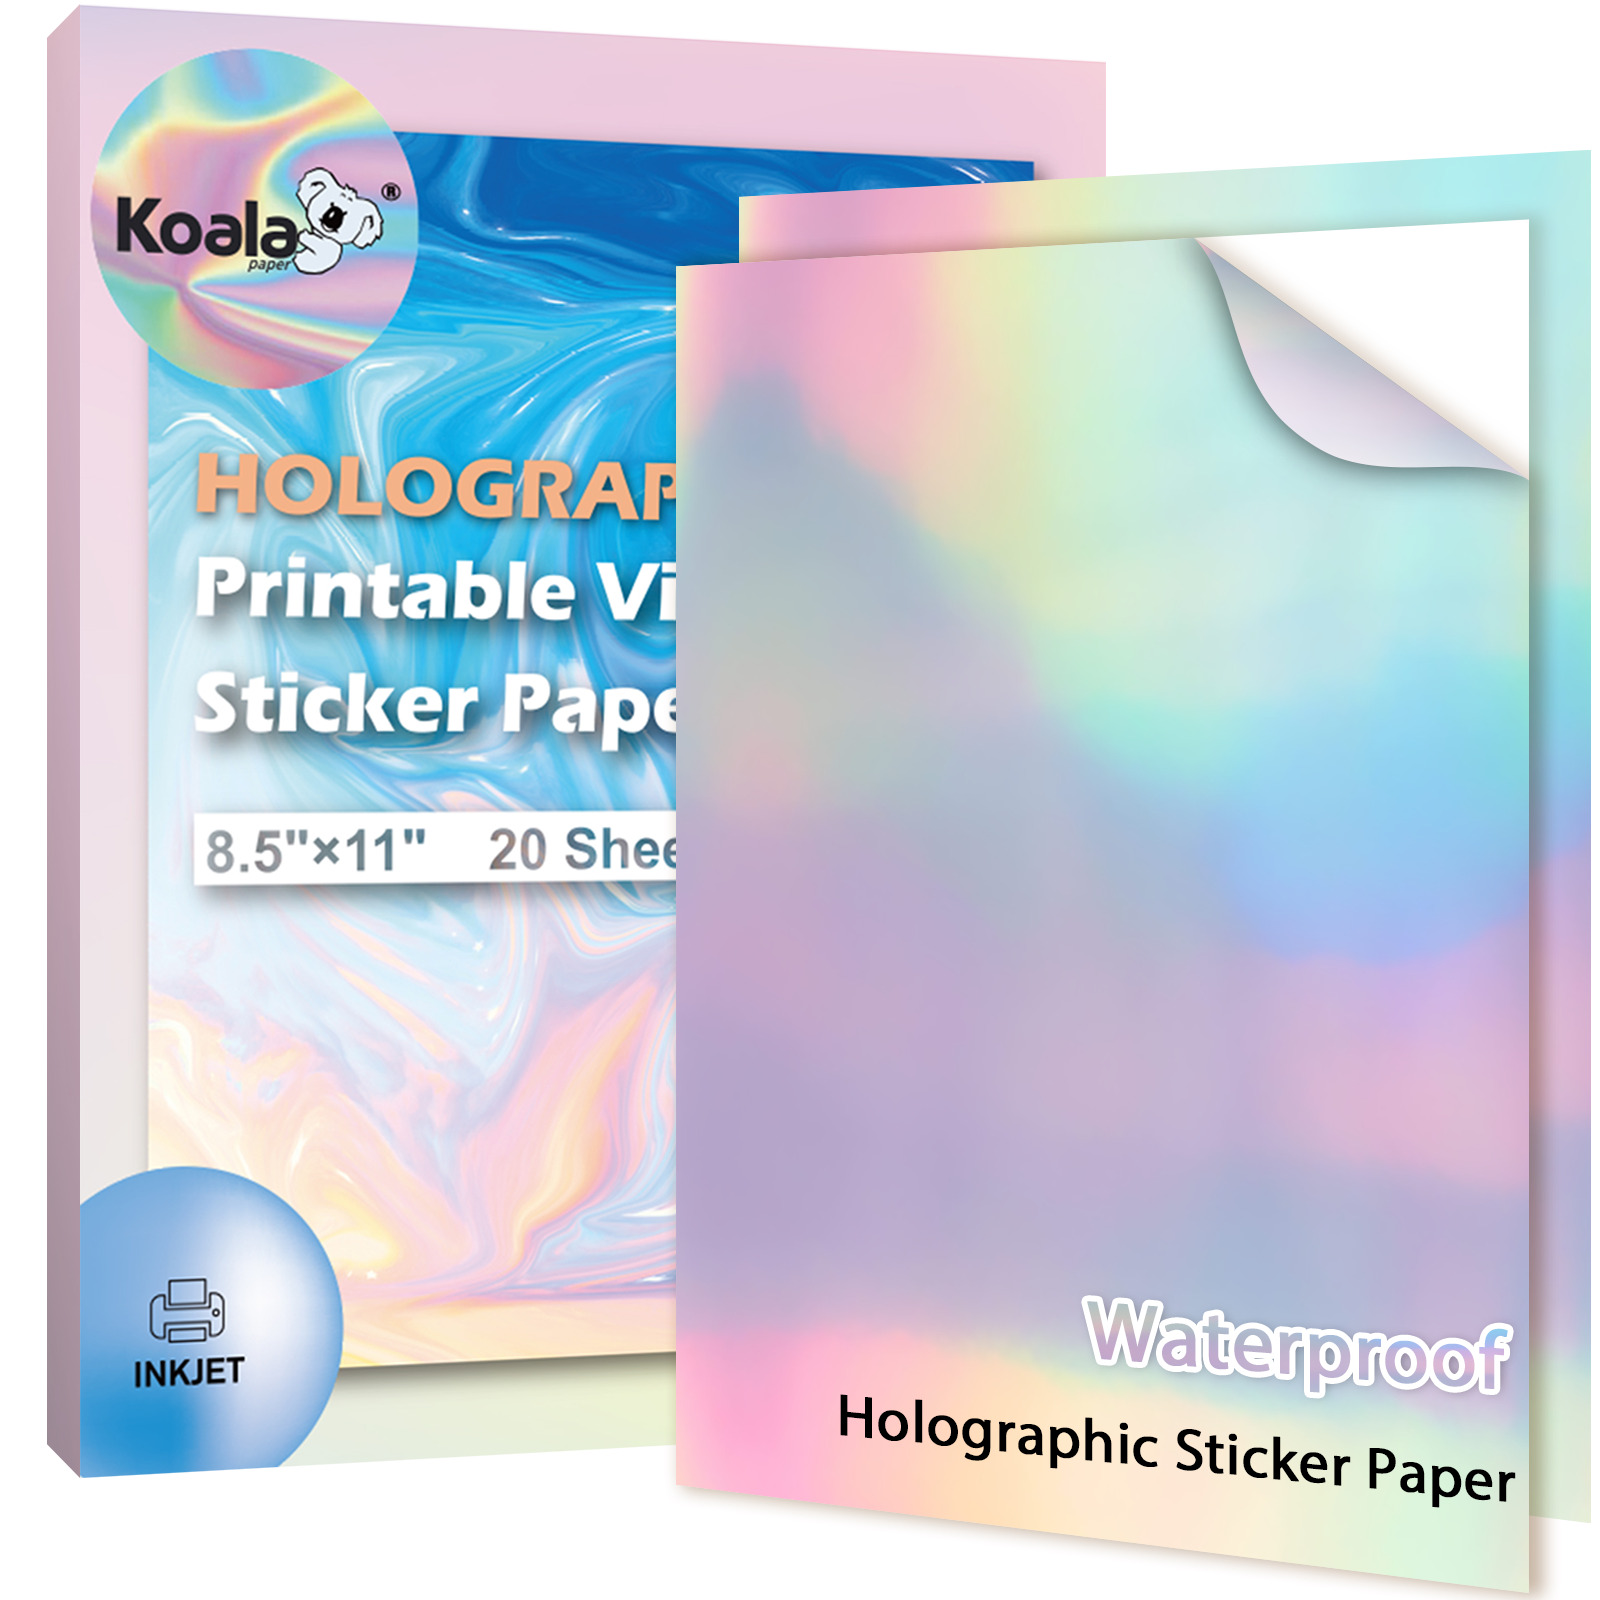 Koala Printable Vinyl Sticker Paper Holographic Glossy Waterproof Rainbow / Star